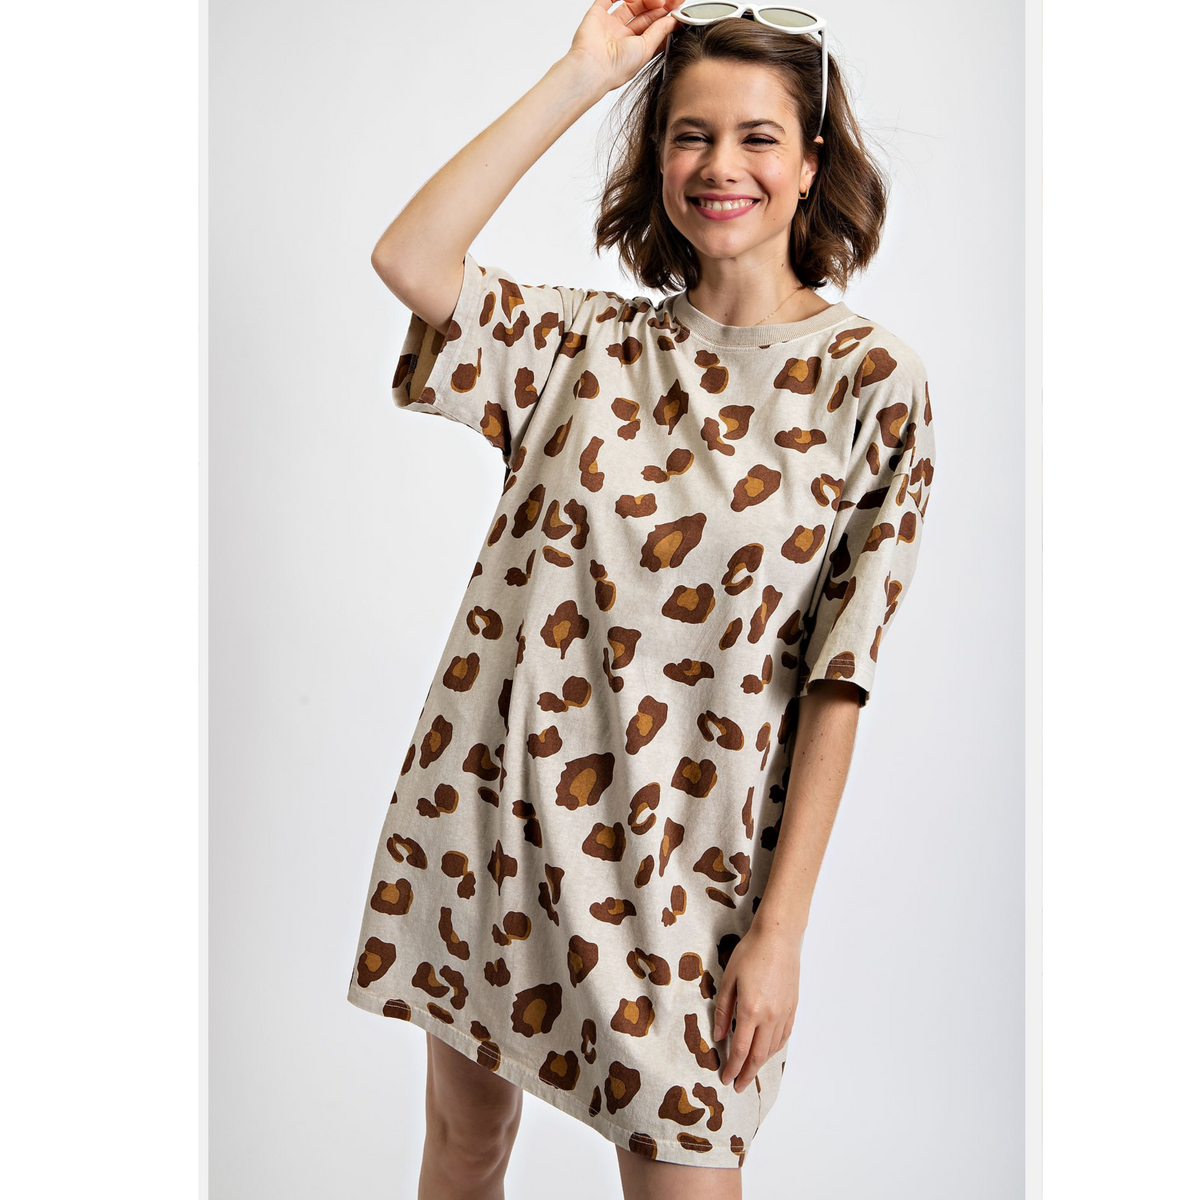 The Leopard Dress